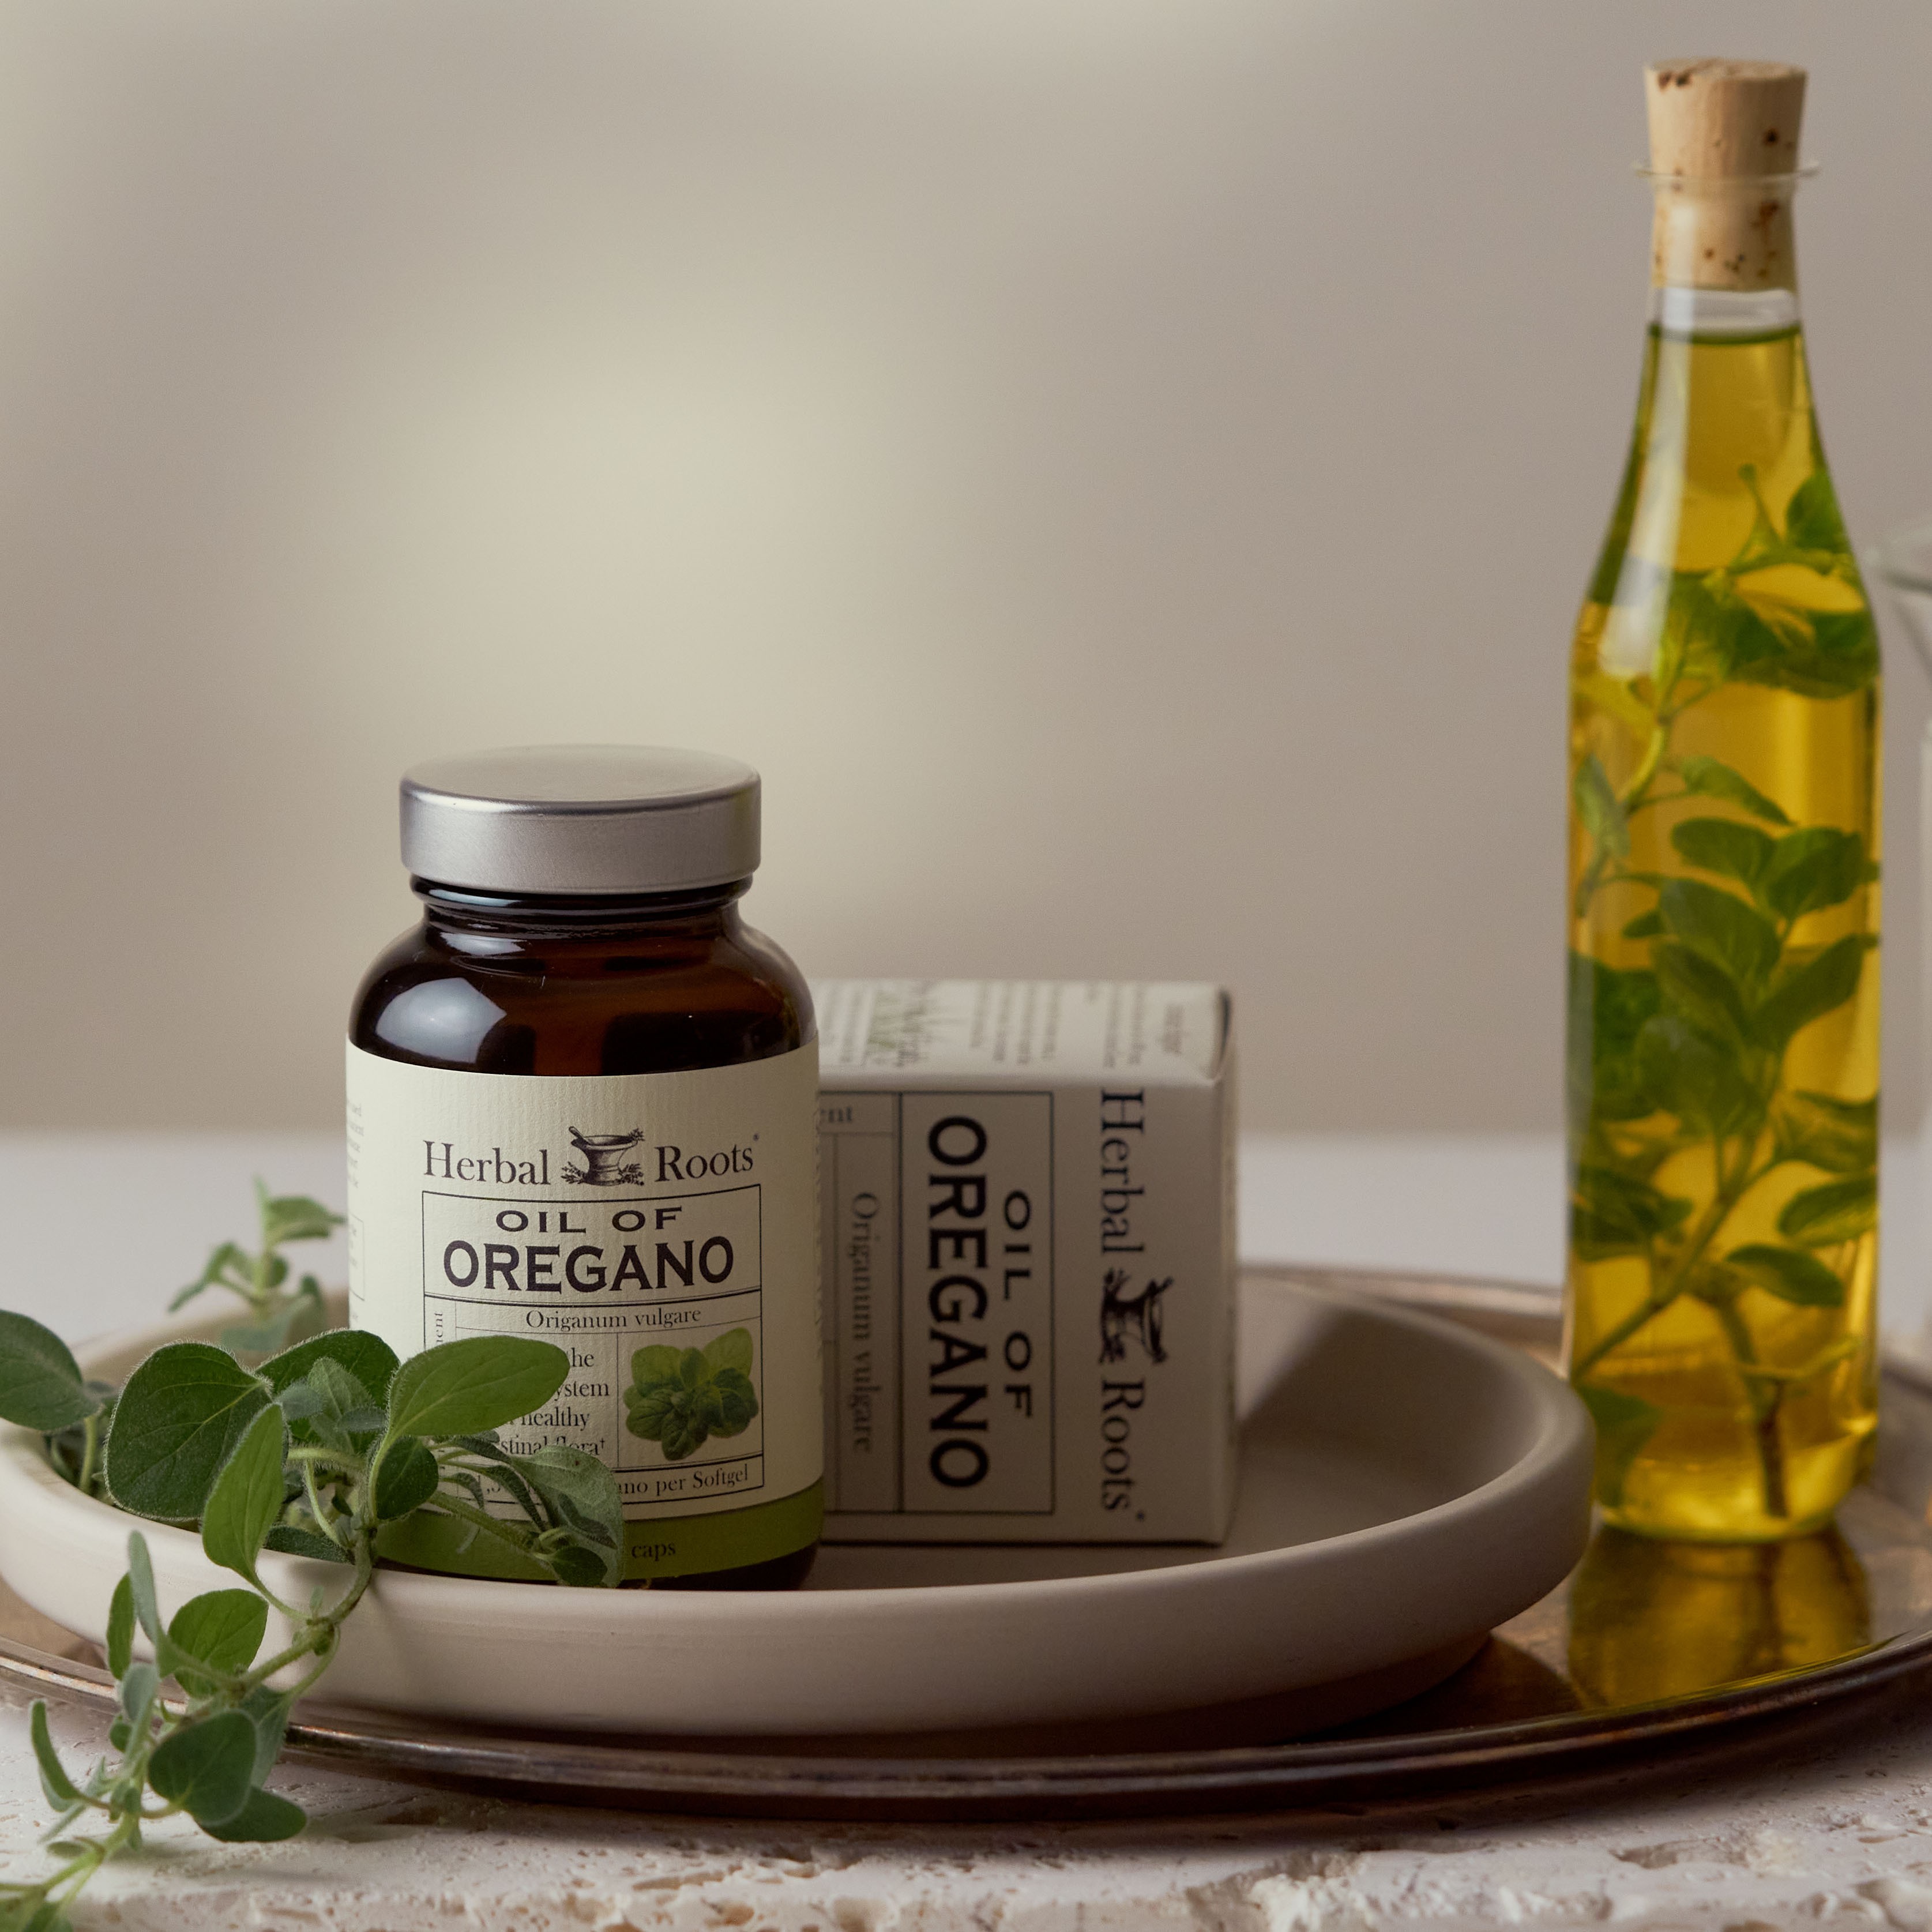 Herbal Roots Oregano oil capsules with fresh oregano and oregano in oil